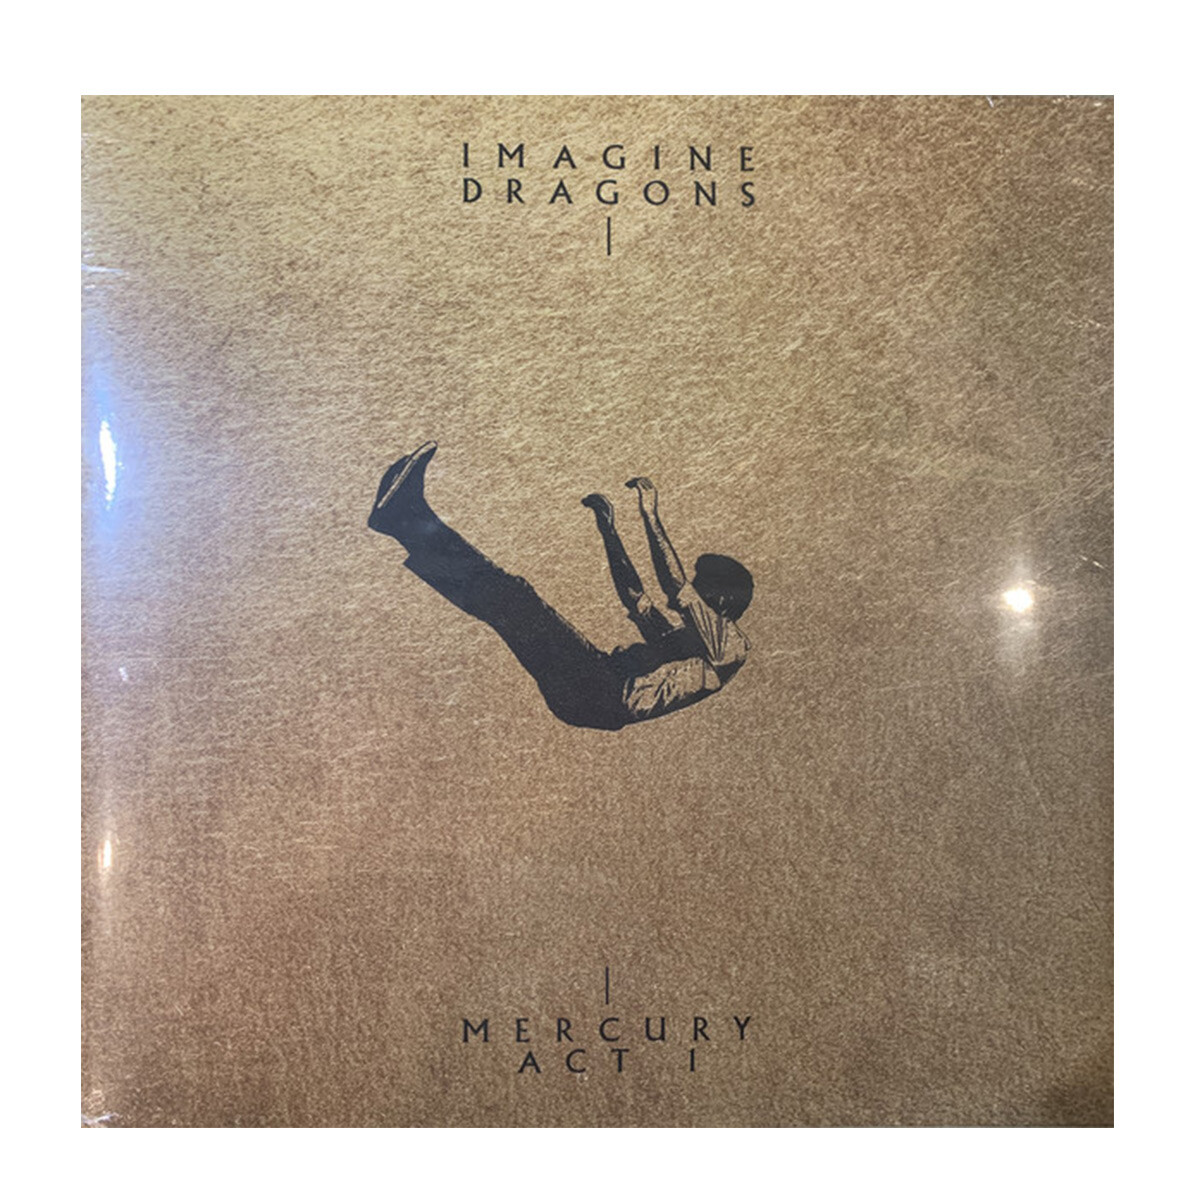 Imagine Dragons - Mercury - Act 1 - Vinilo 